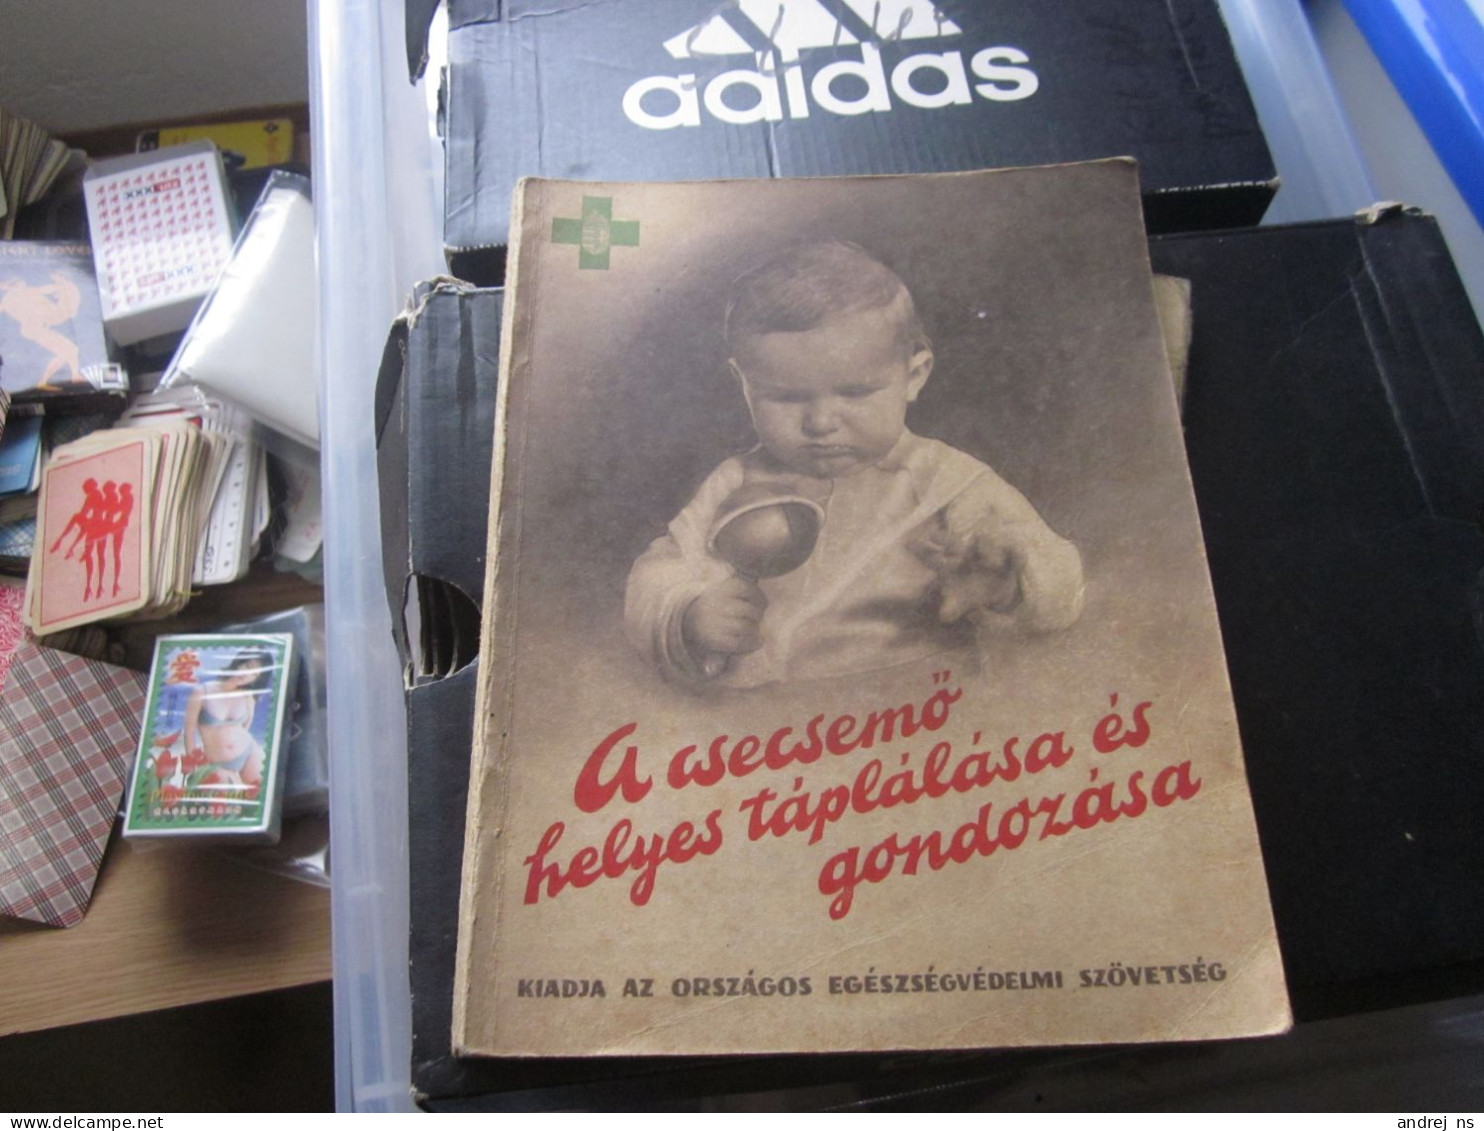 A Csecsemo Helyes Táplálása Es Gondozasa Proper Feeding And Care Of The Baby Budapest 1943 92 Pages - Livres Anciens